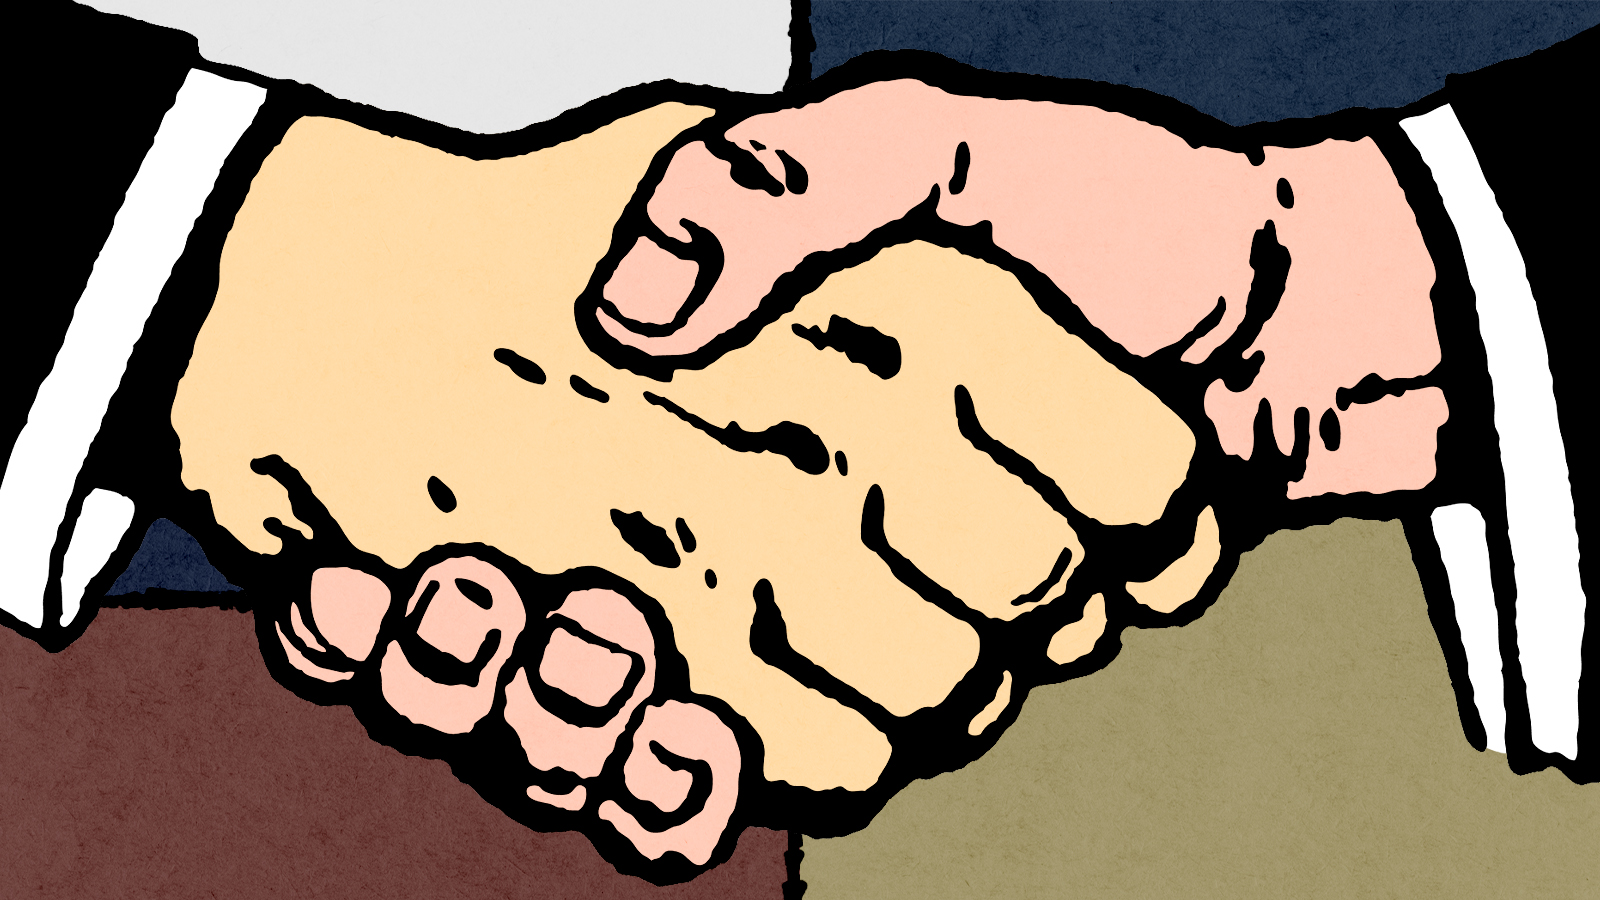 A handshake.